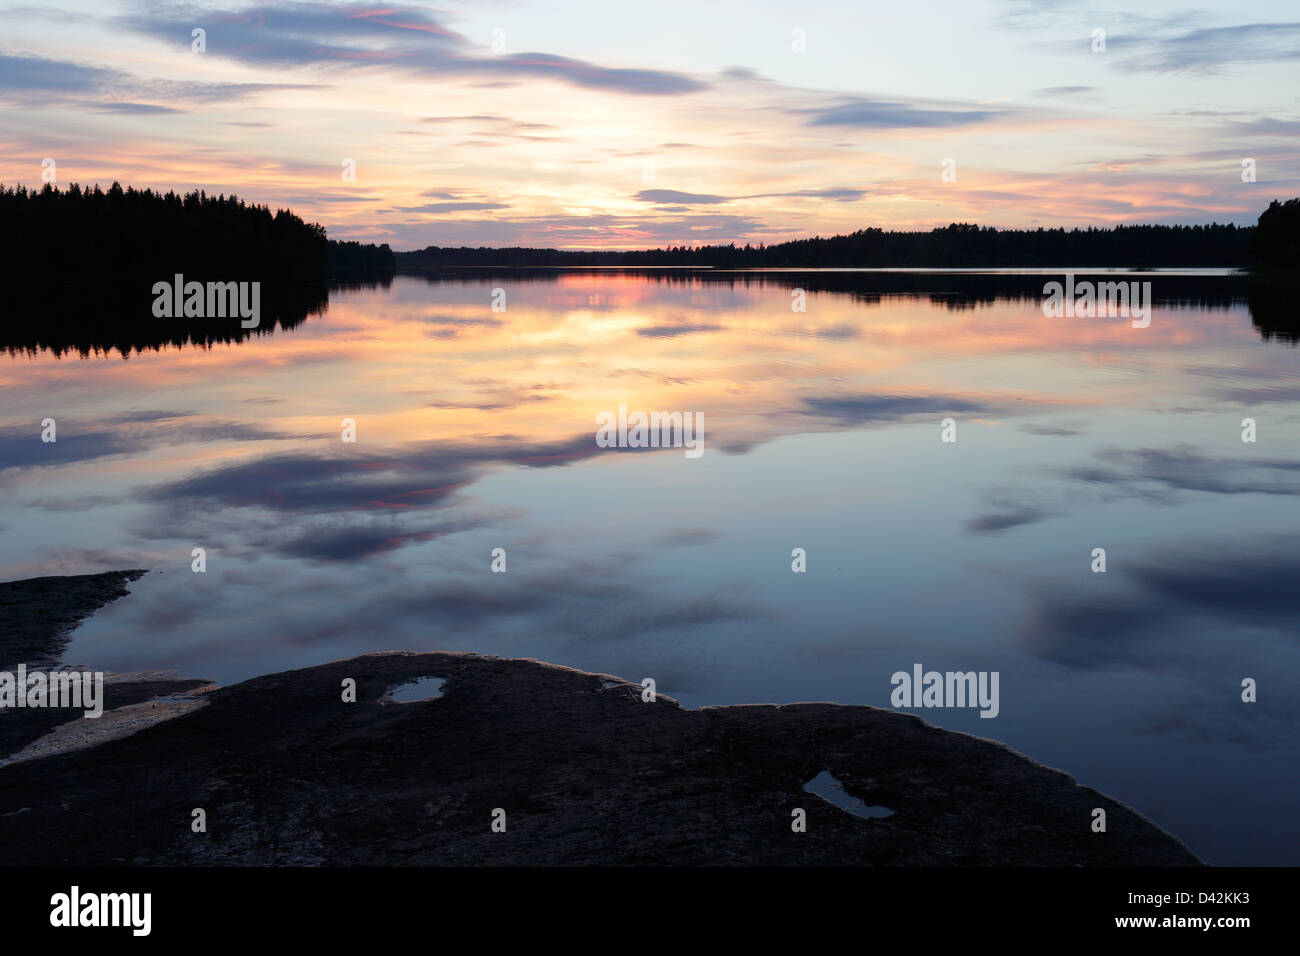 Silvkoparen, Sweden, at sunset on a lake Silvkoparen Stock Photo